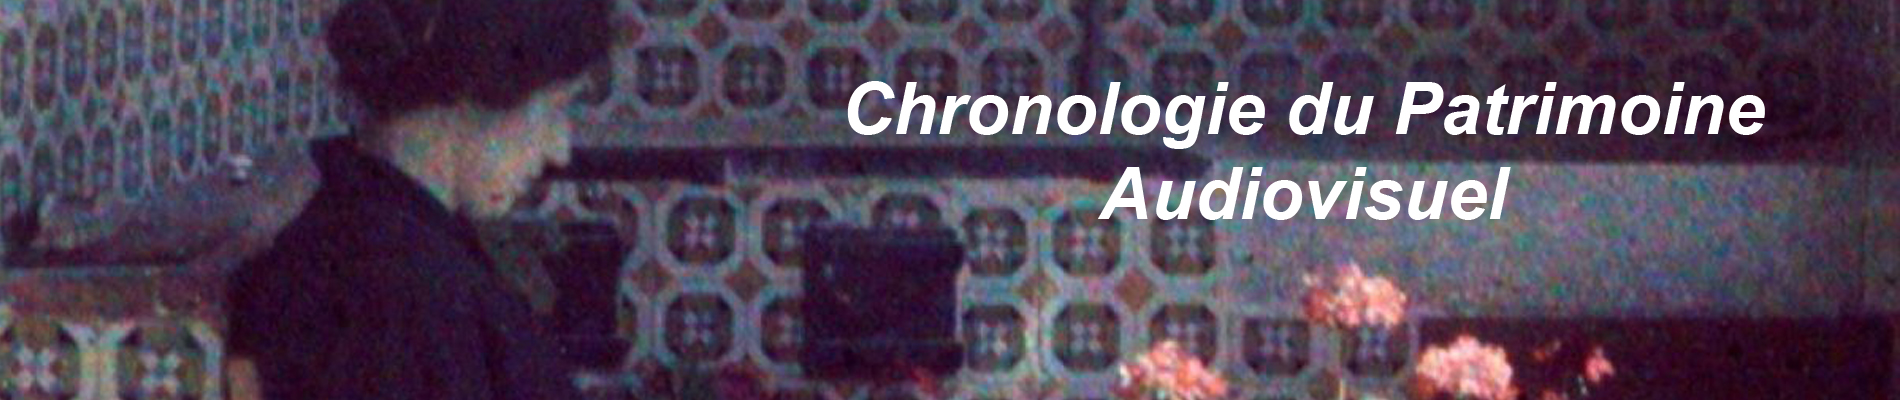 banner_chronology_of_audiovisual_heritage_1900x400_fr